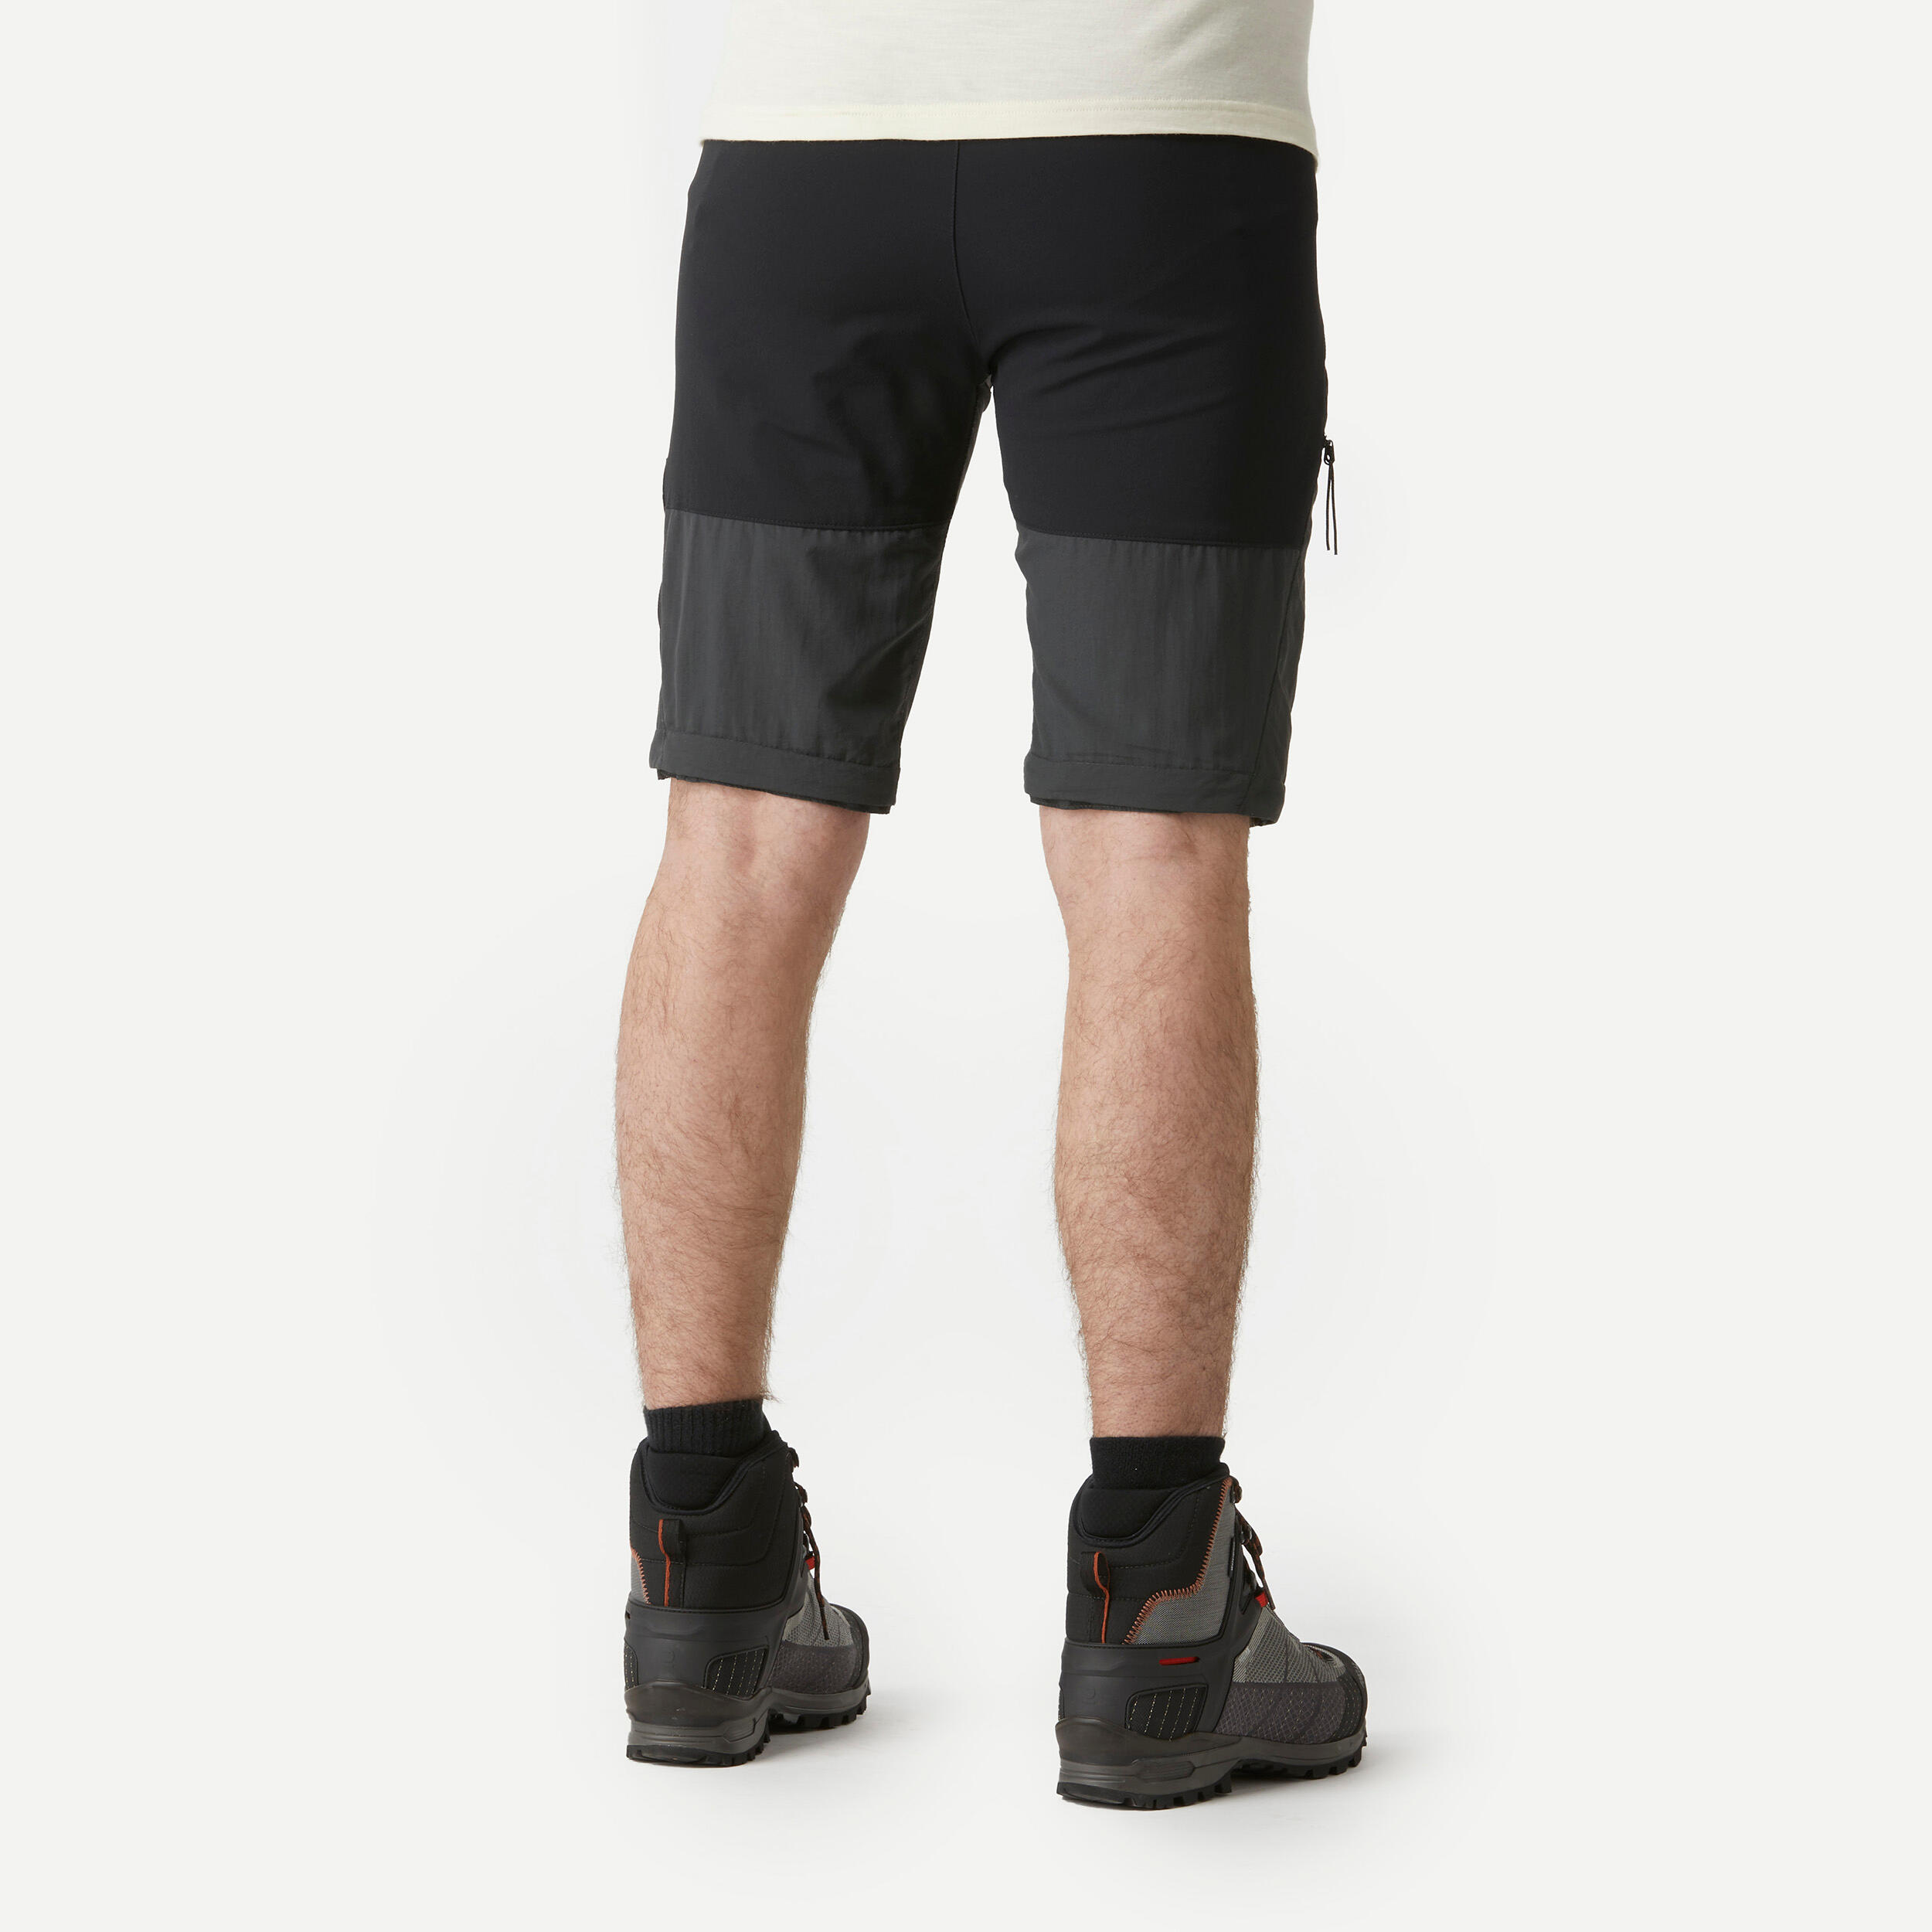 Men's 2-in-1 Hiking Pants - MT 500 - Carbon grey, Black - Forclaz